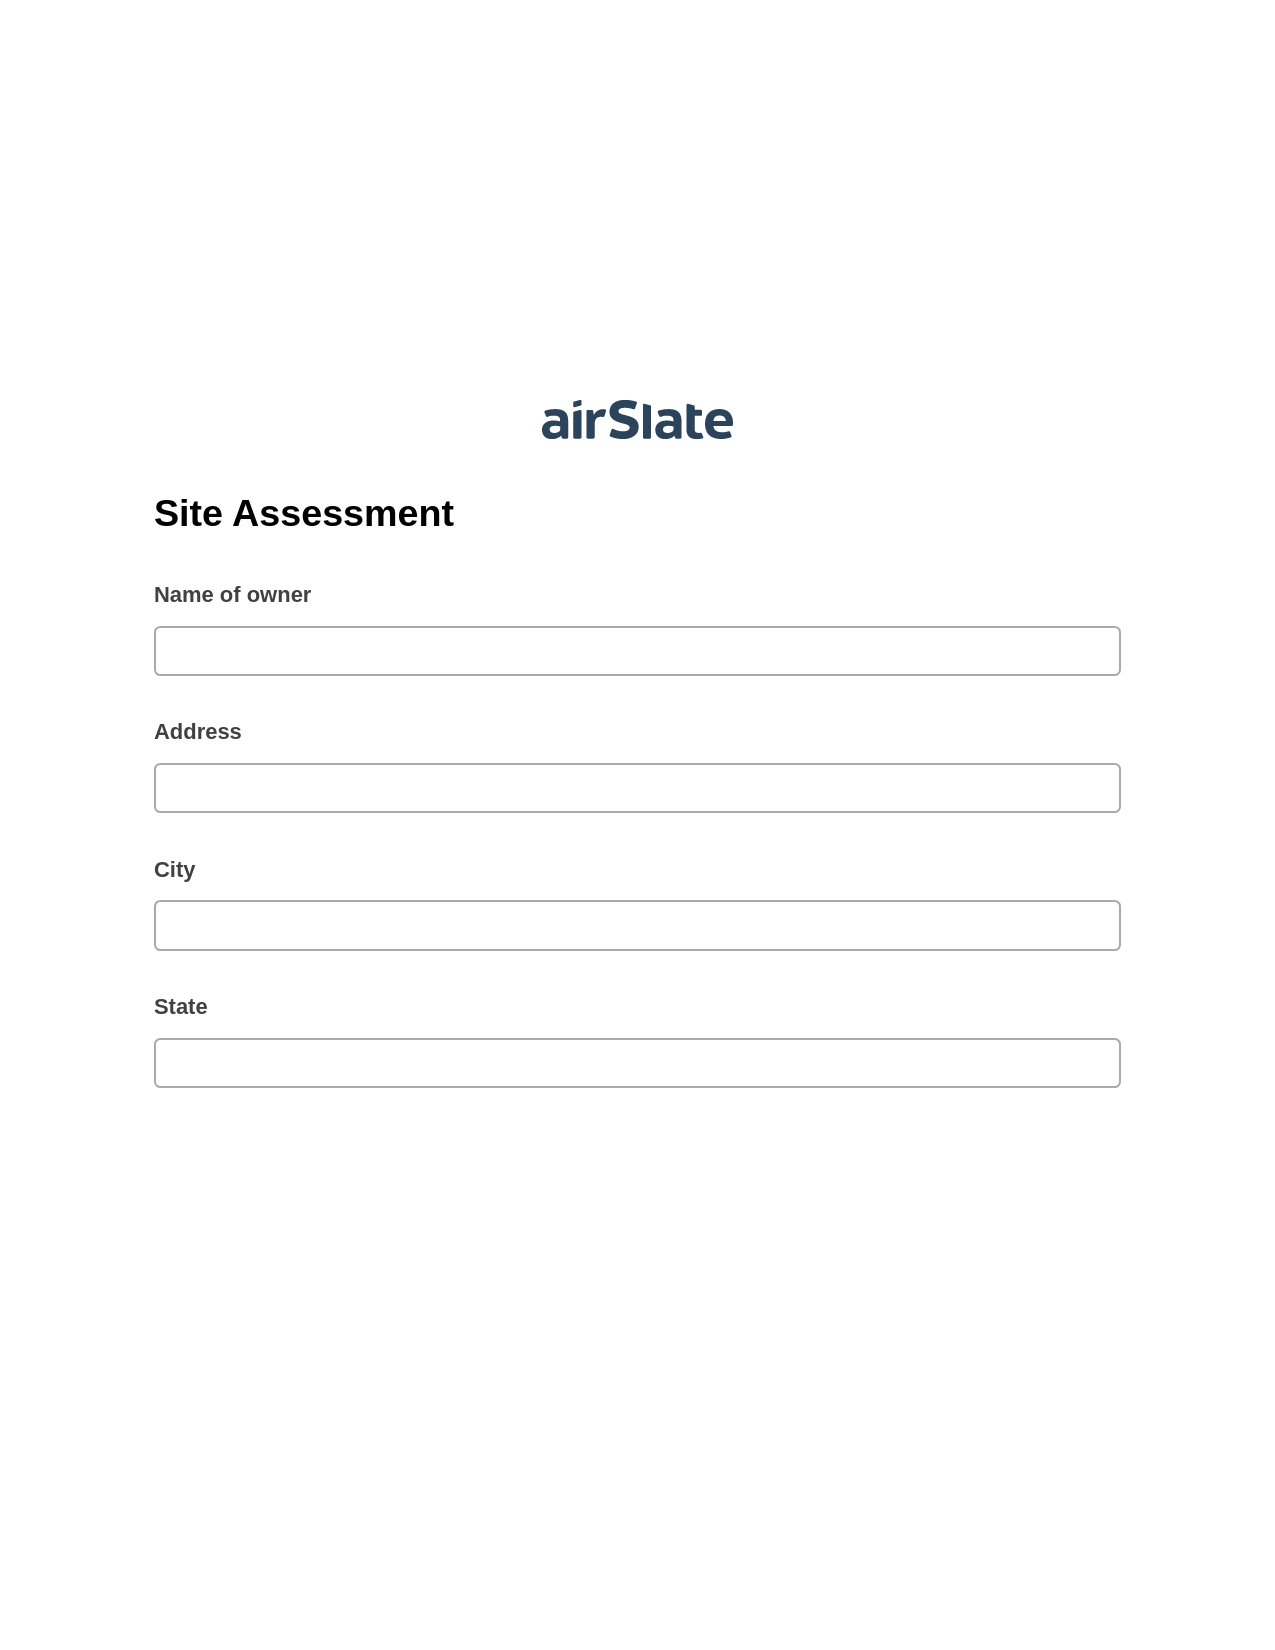 Site Assessment Pre-fill from CSV File Bot, Google Calendar Bot, Export to Google Sheet Bot